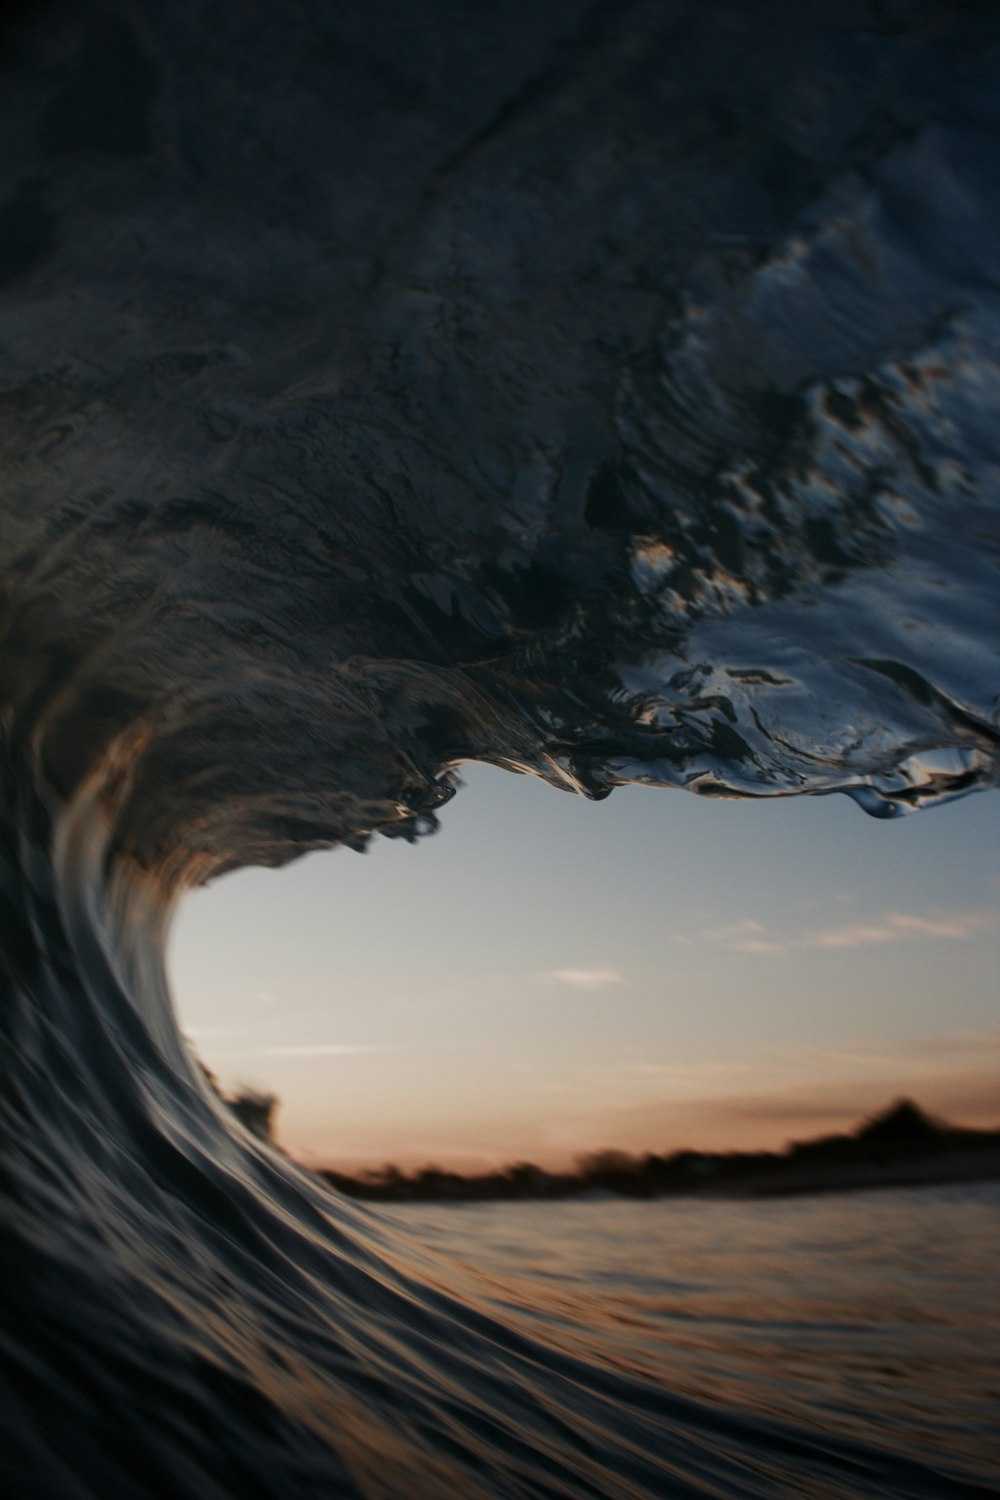 closeup photo of ocean wave